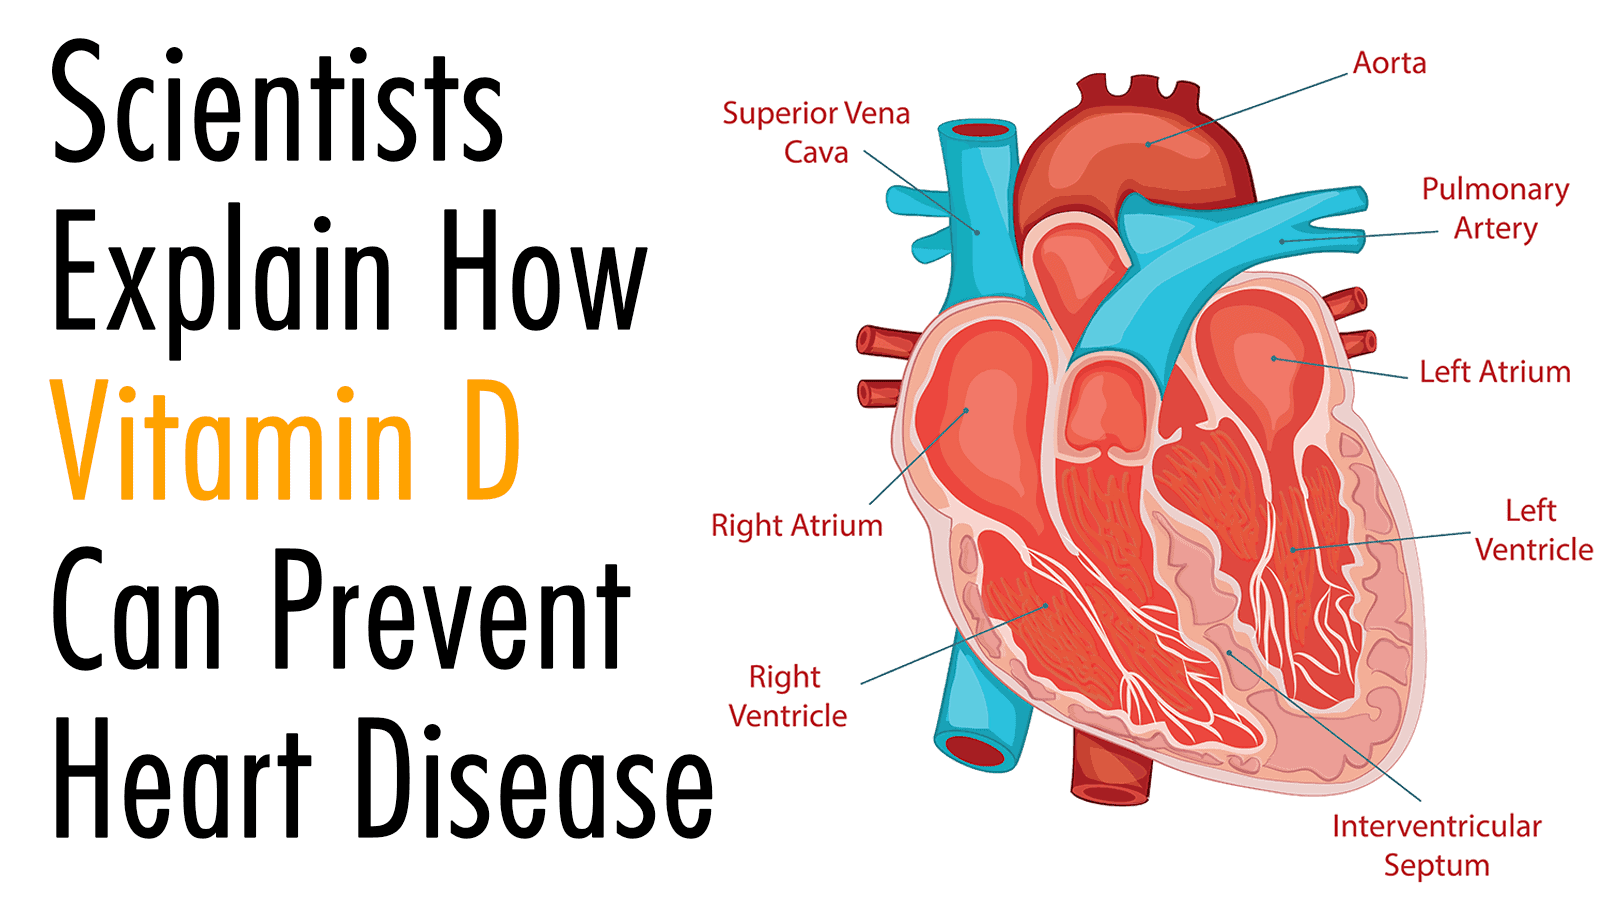 Scientists Explain How Vitamin D Can Prevent Heart Disease